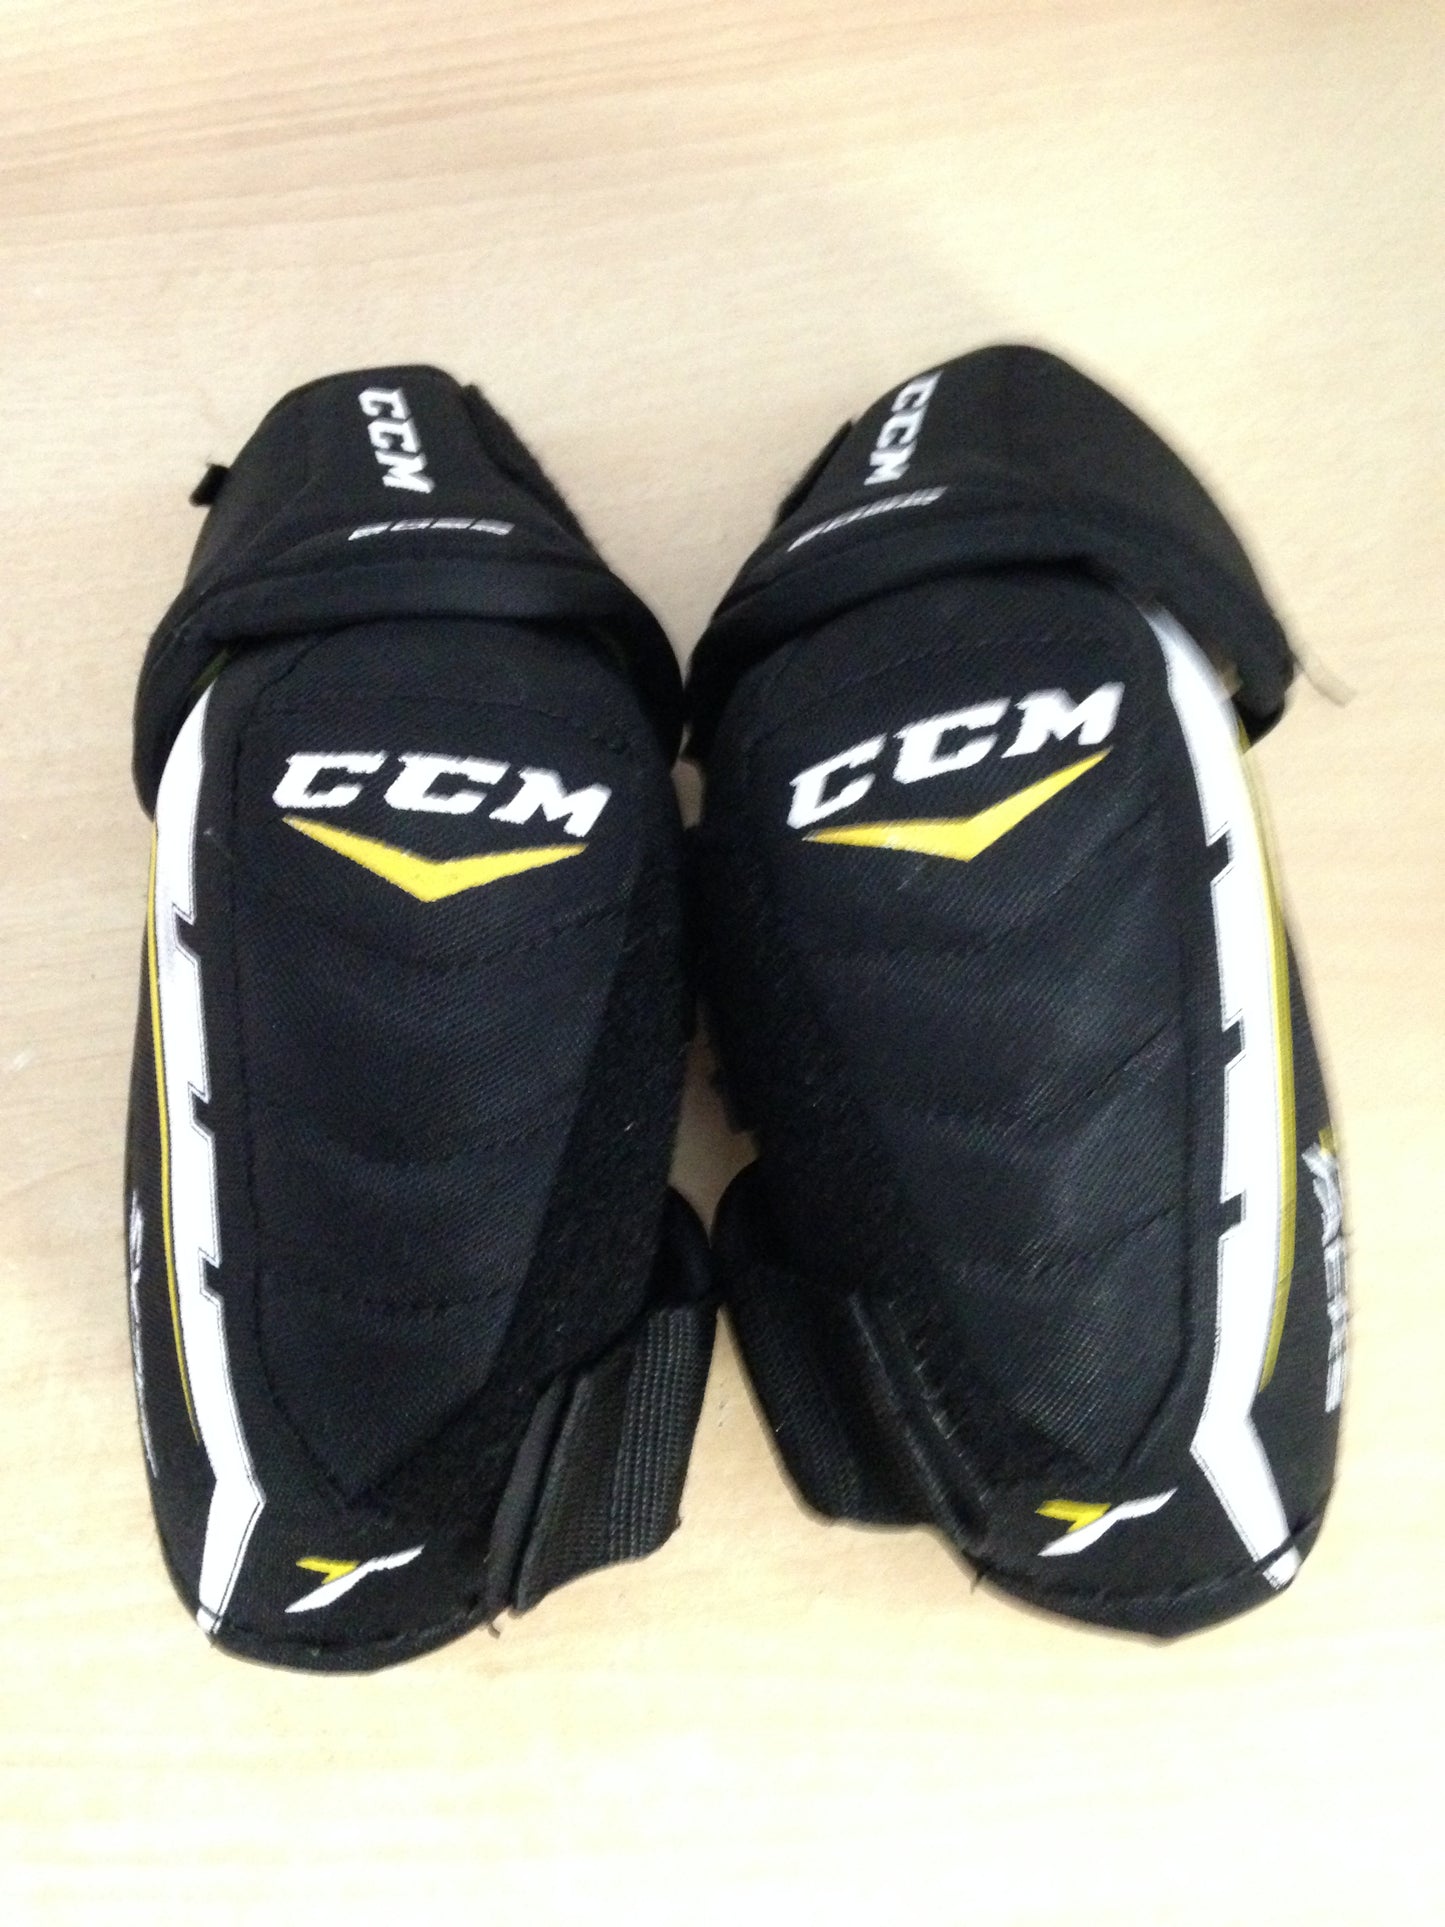 Hockey Elbow Pads Men's Size Small CCM Tacks Black Gold White